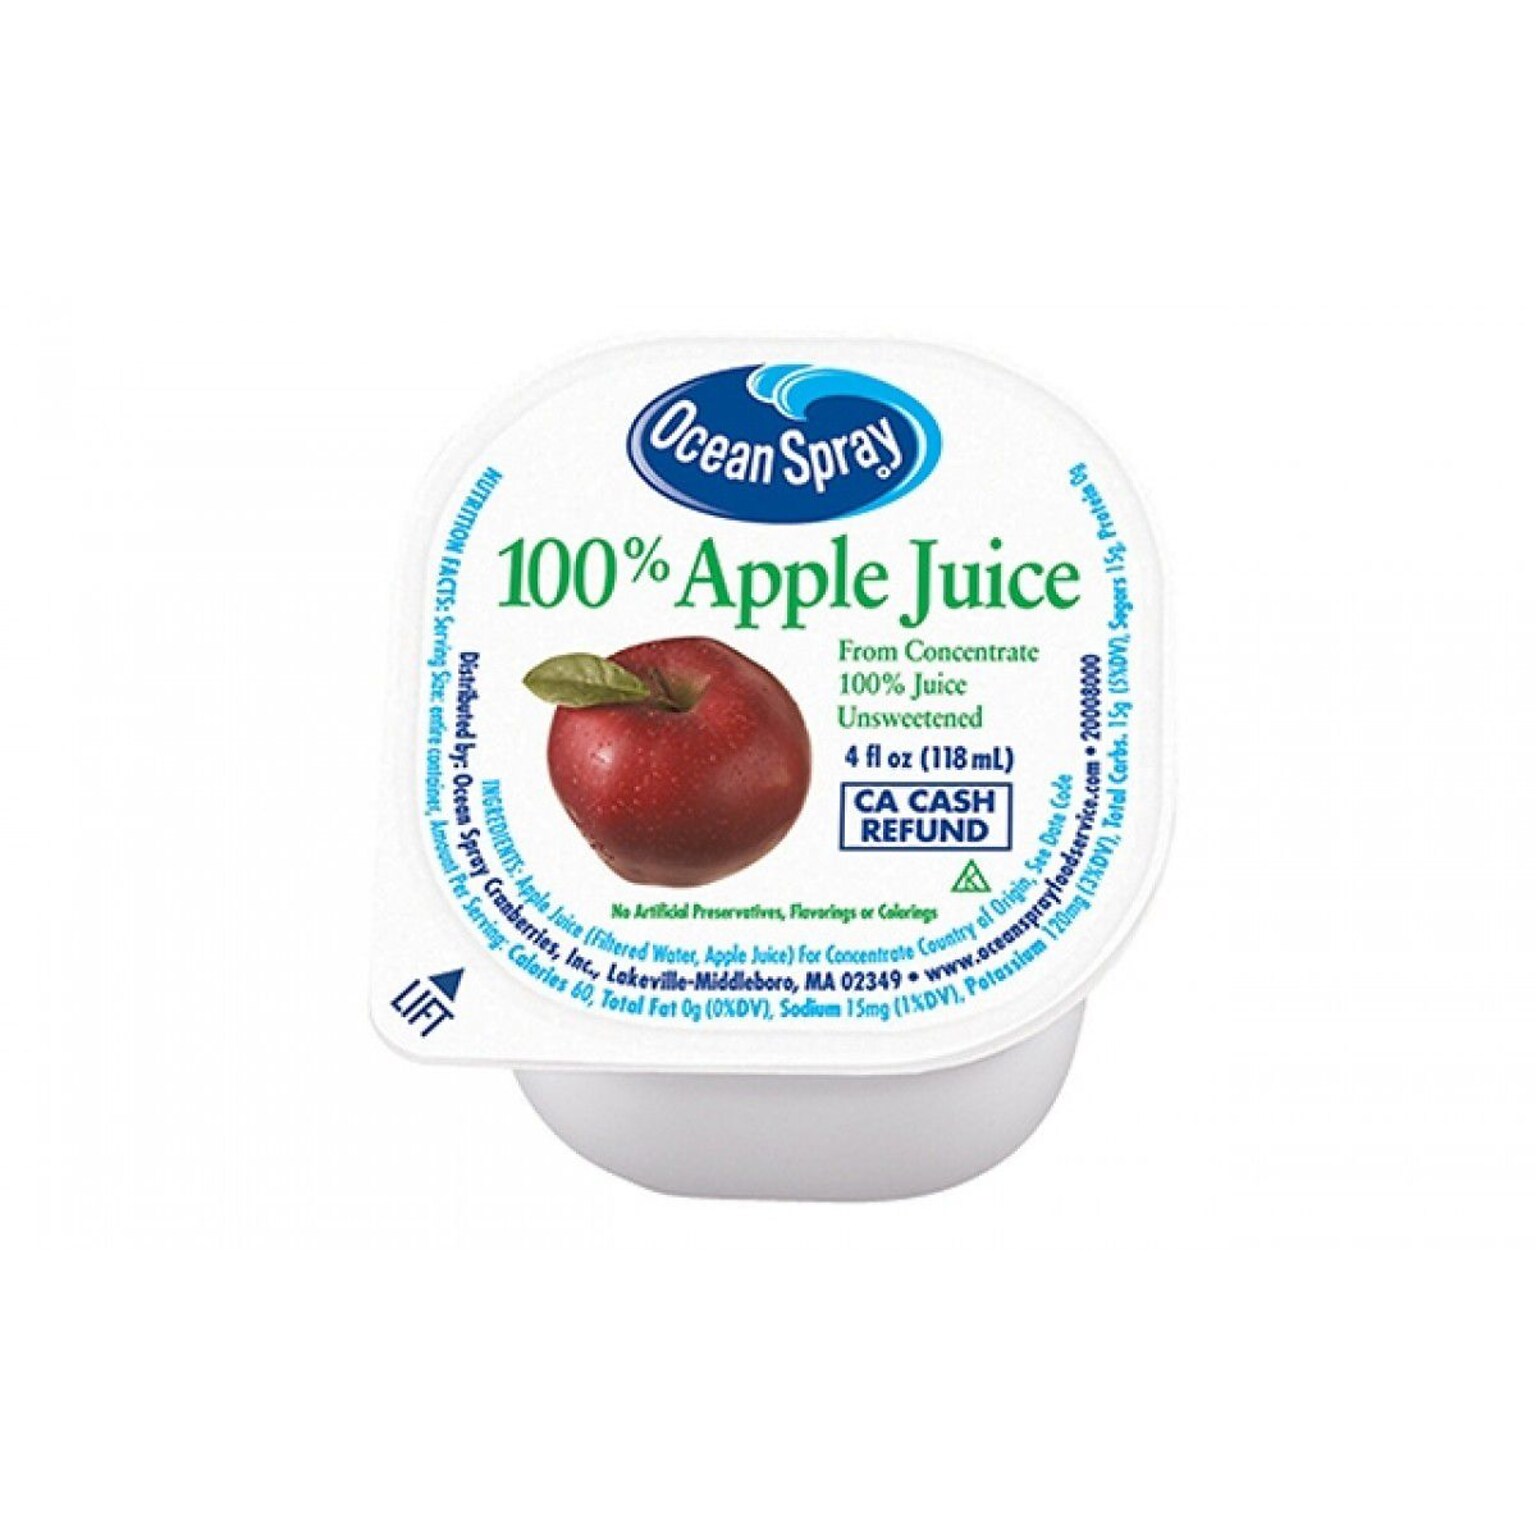 Ocean Spray 100% Apple Juice, 4 oz., 48 Cups (00720)